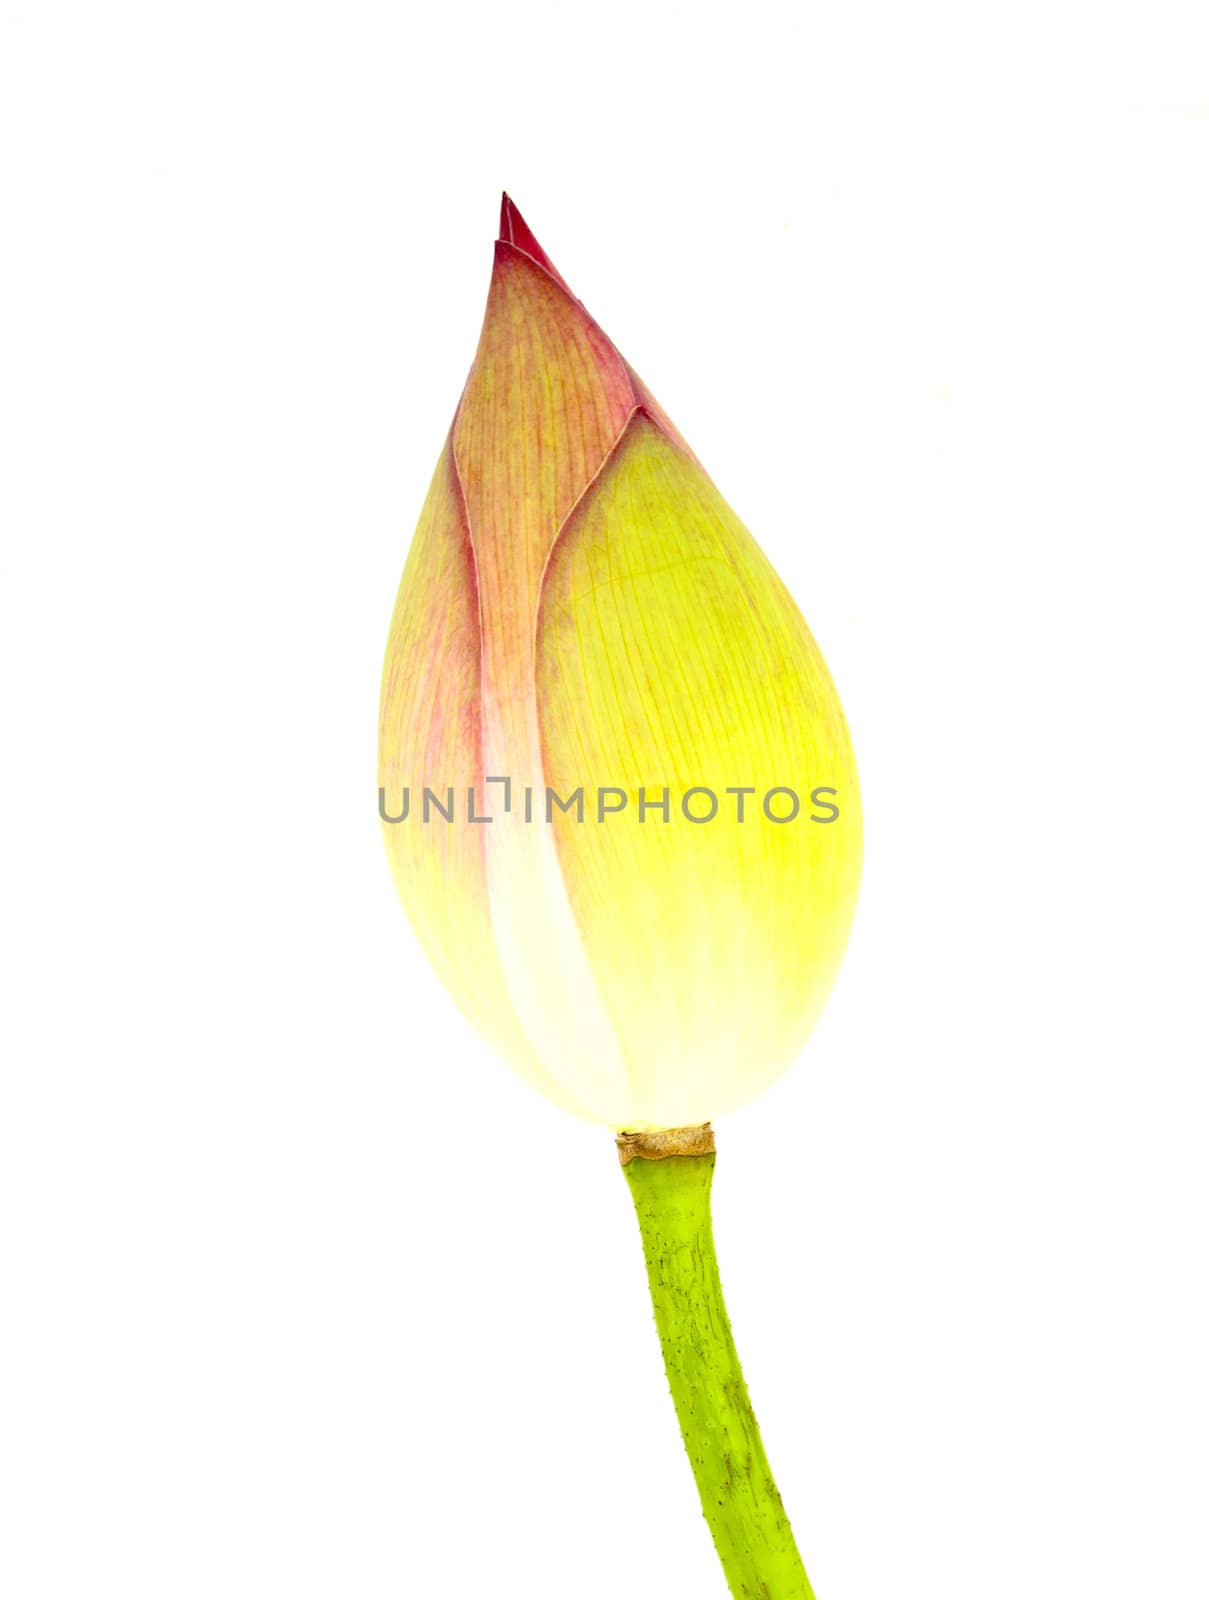 Bud lotus on white background